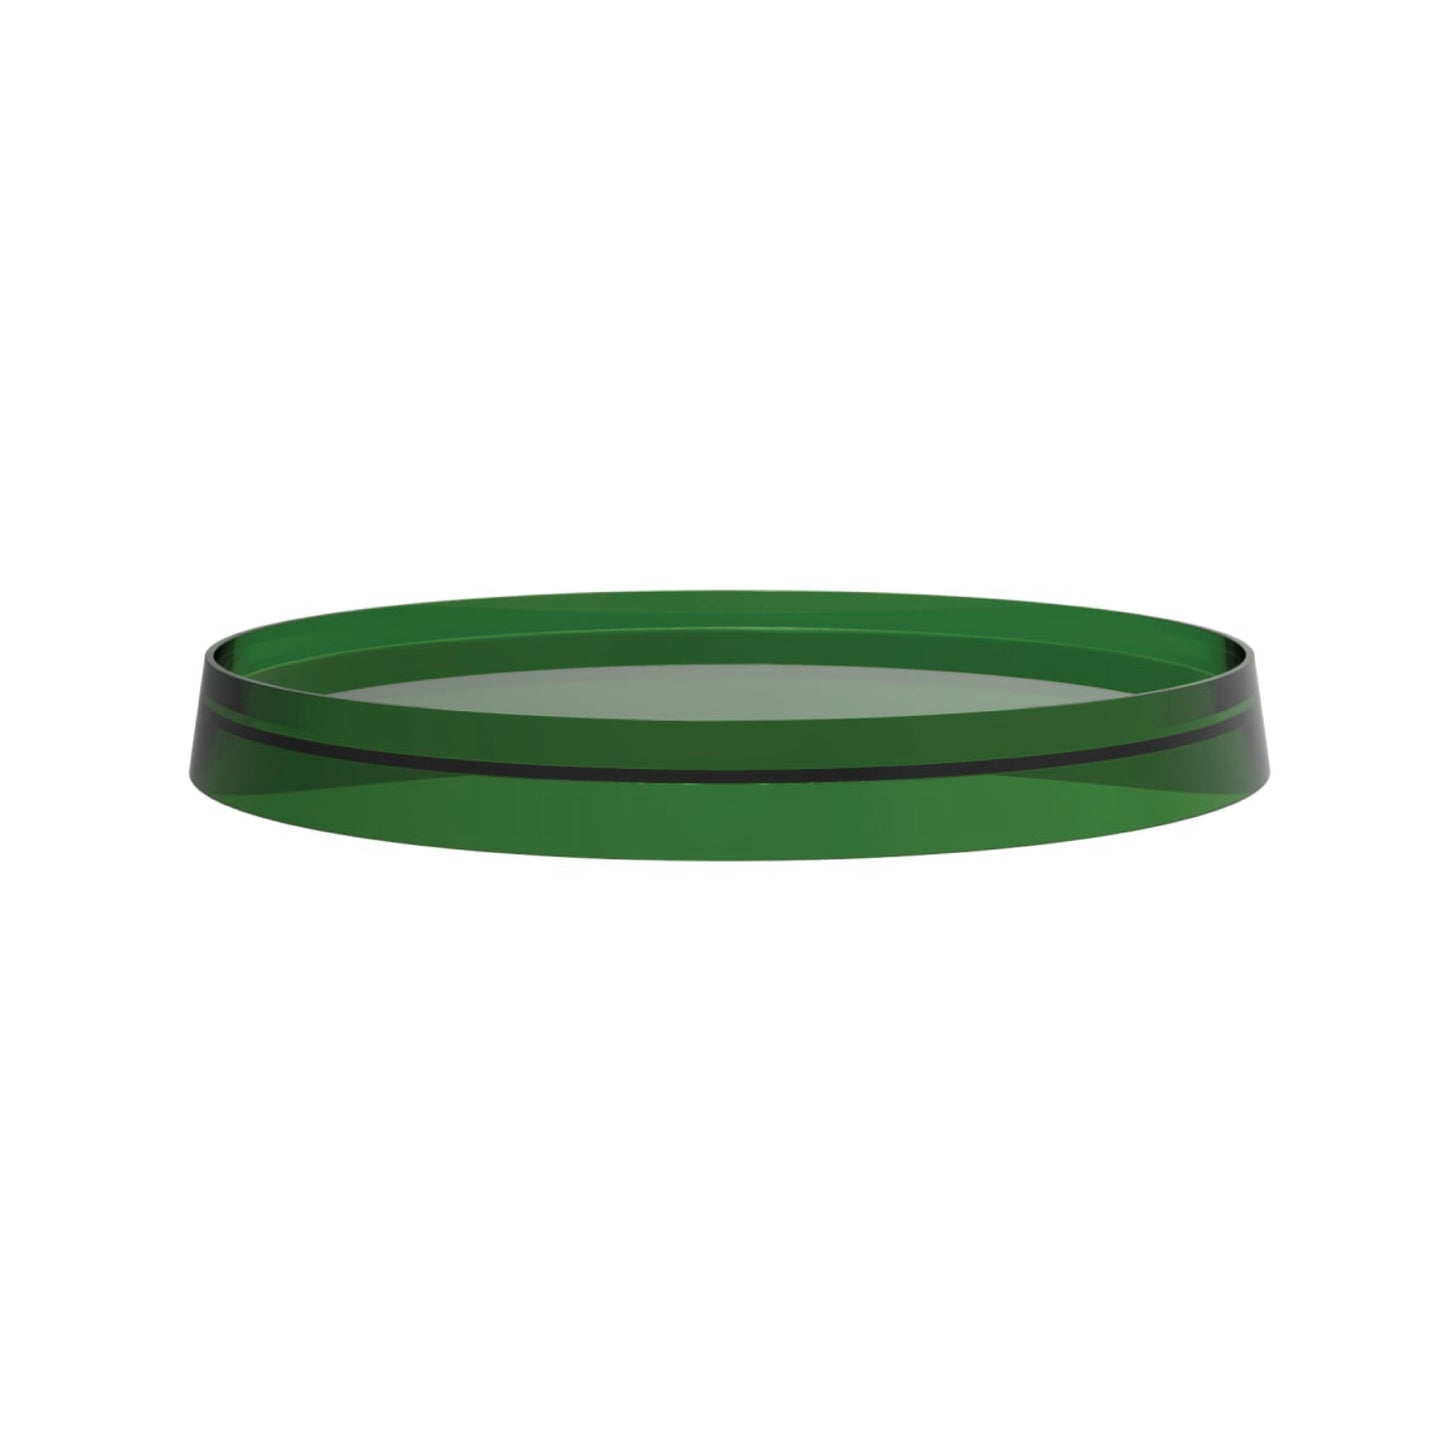 Laufen Kartell 11" Emerald Green Disc Tray for Bathtub Faucet Model H321331